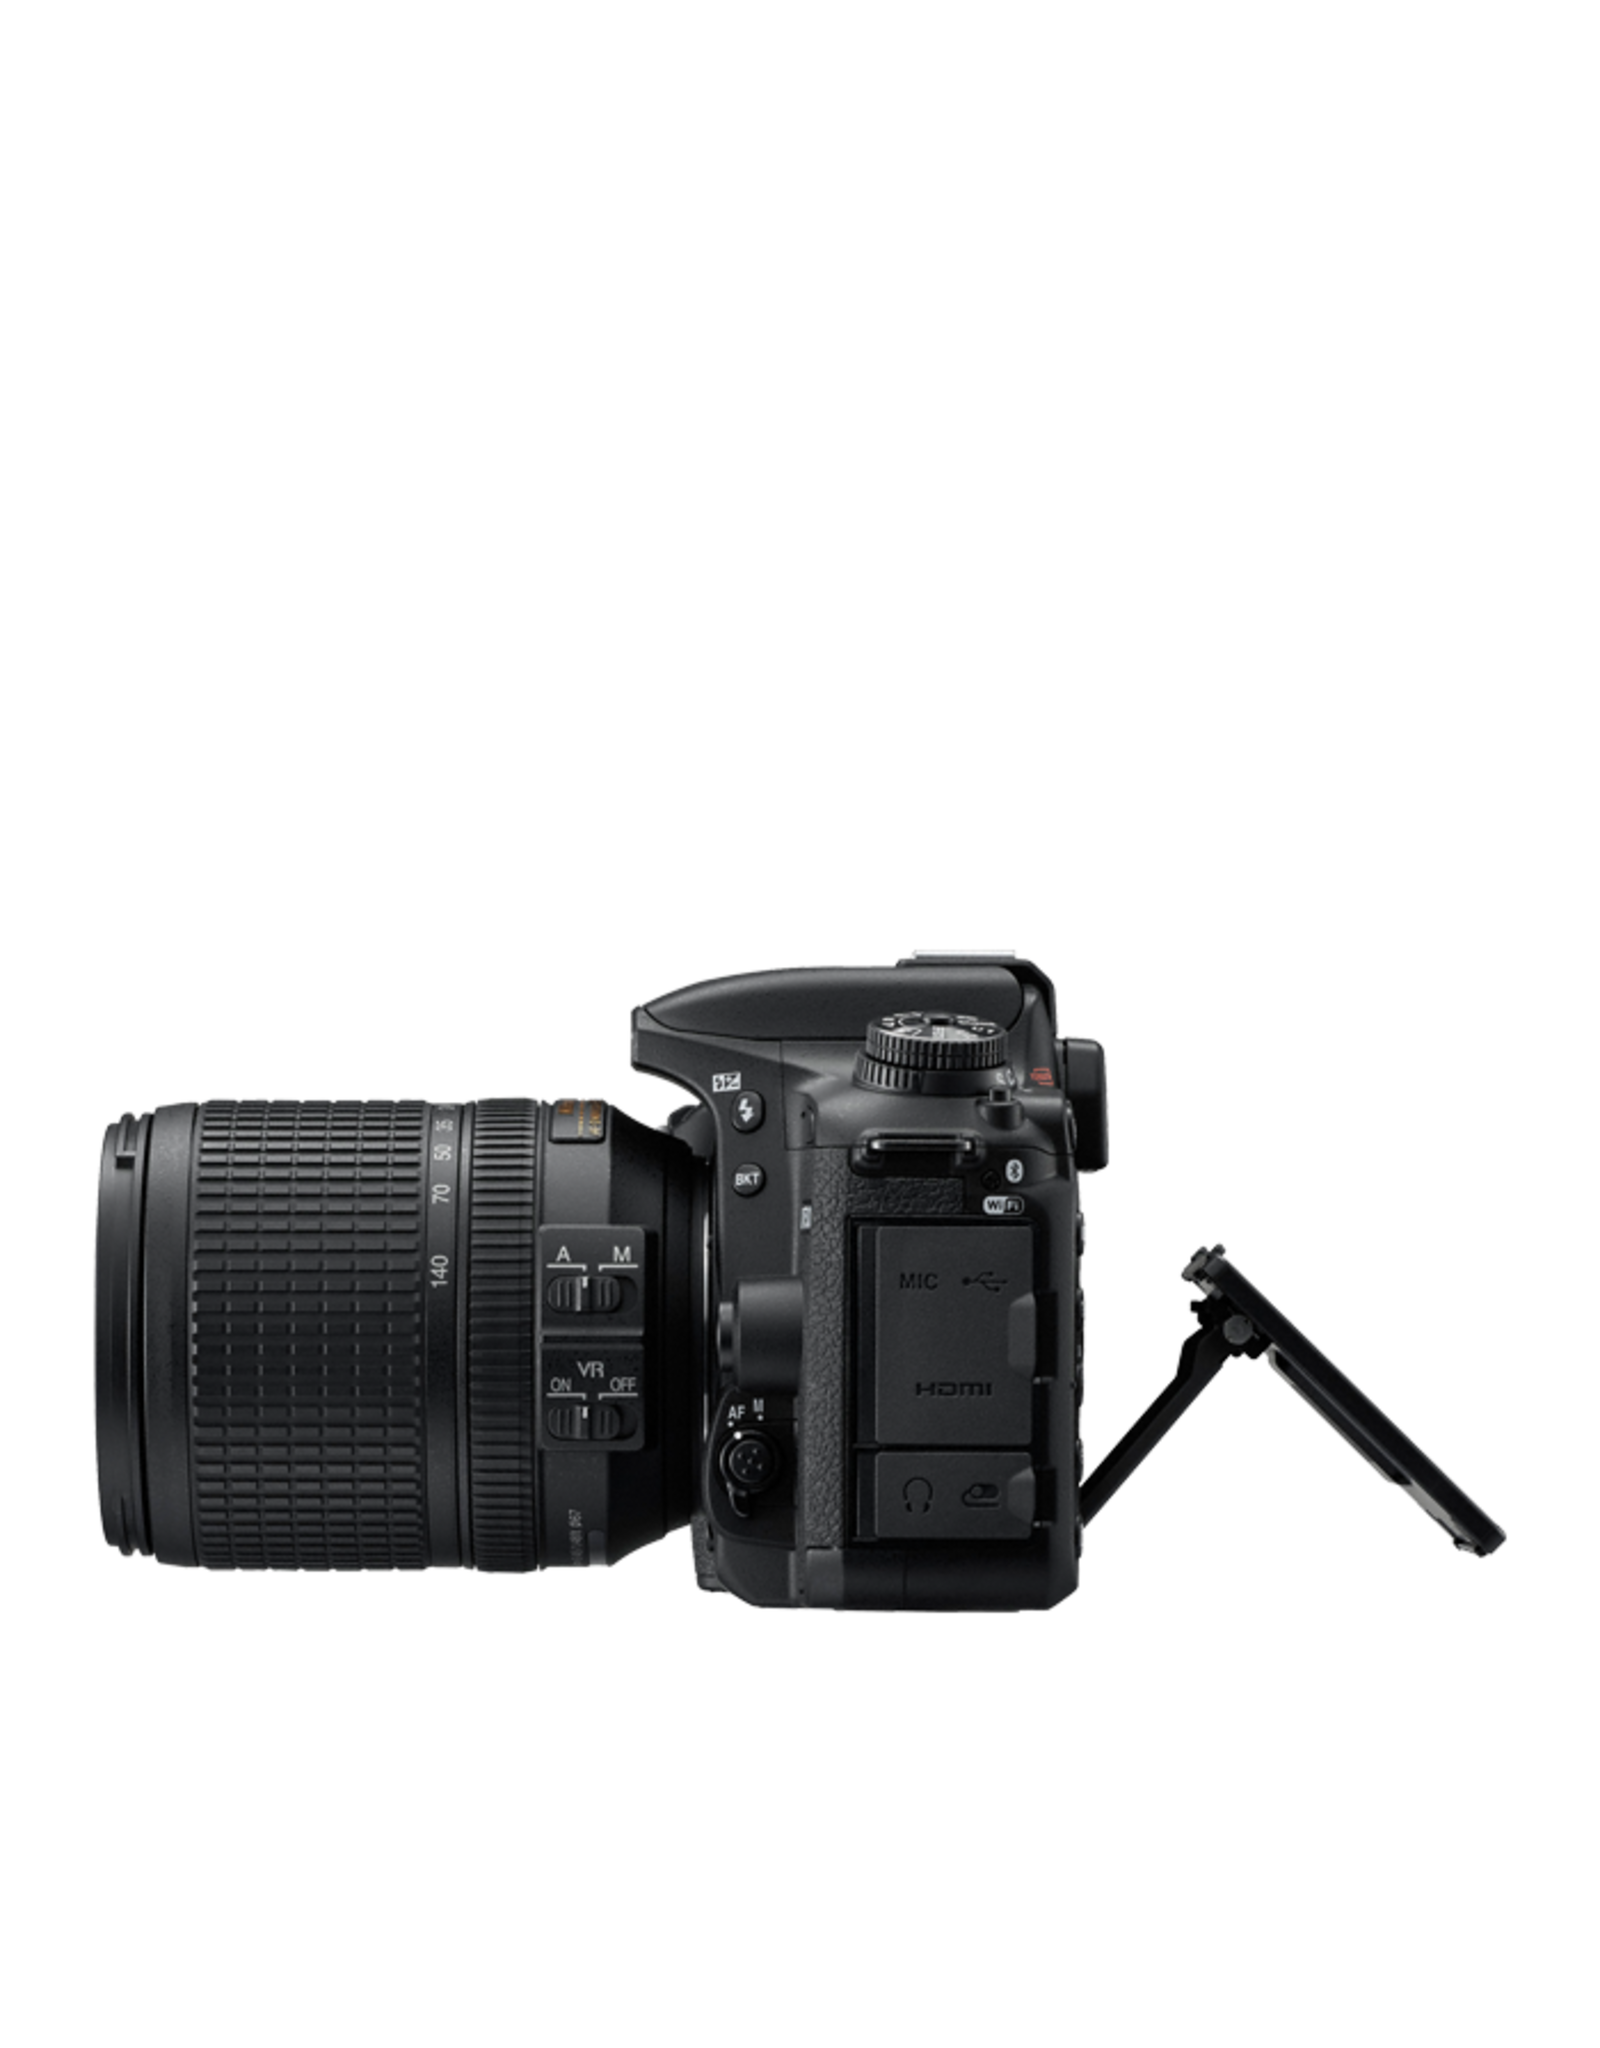 Nikon Nikon D7500 DSLR with 16-80mm Lens